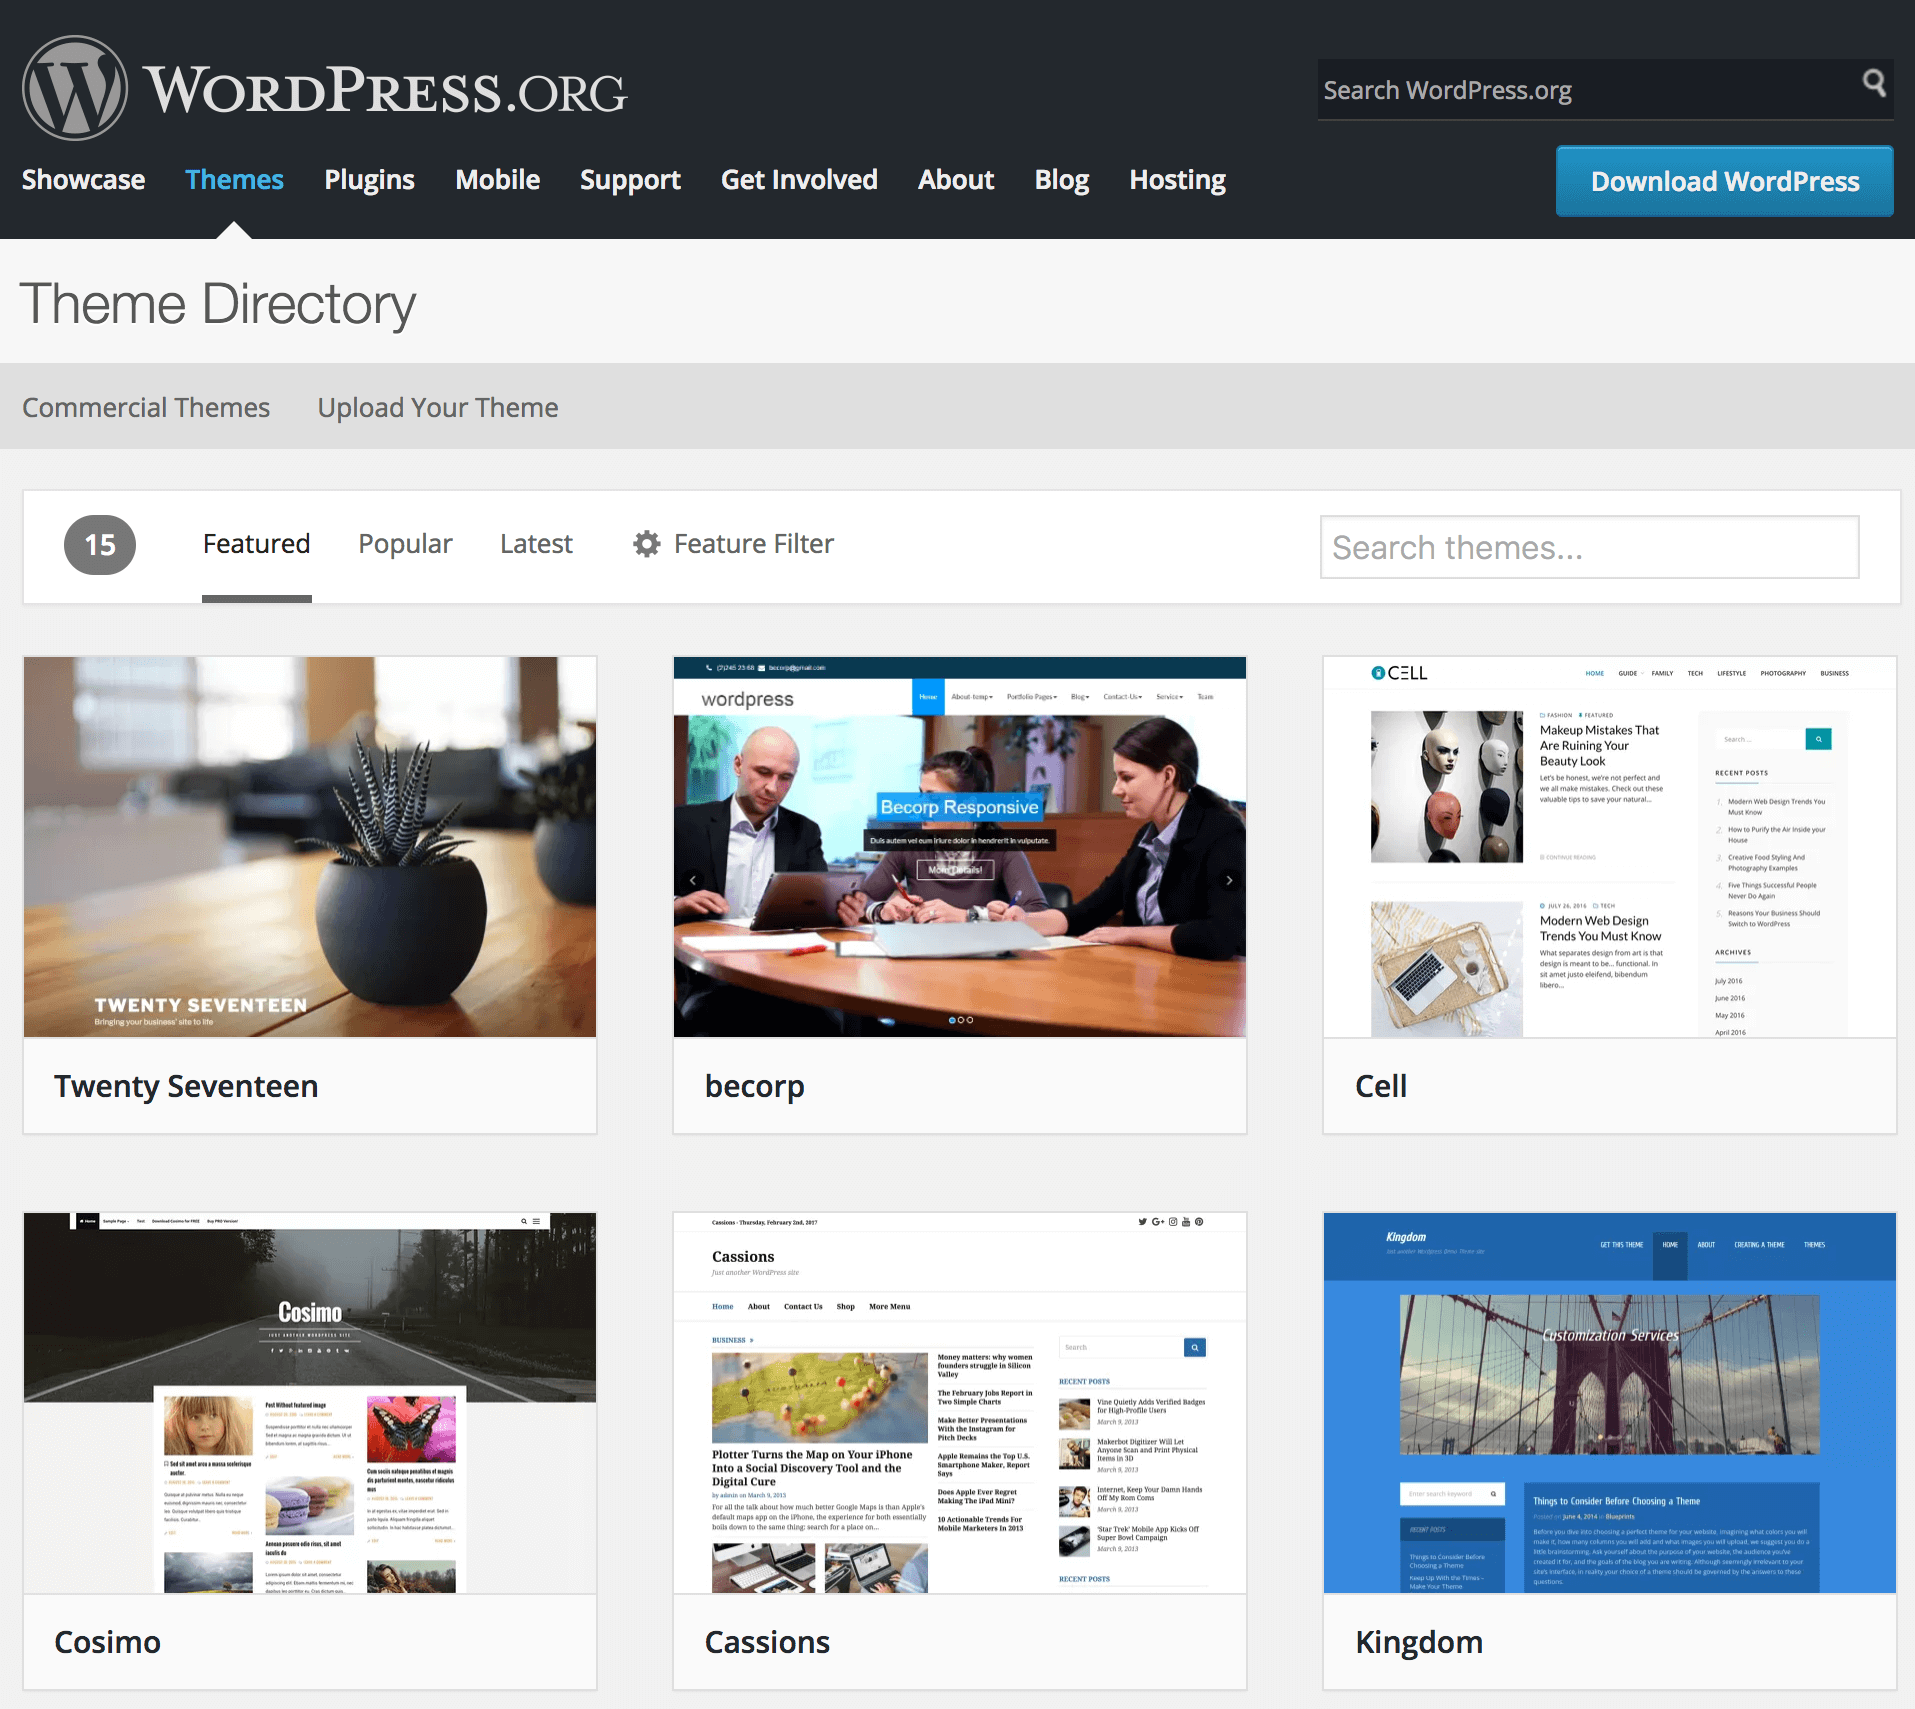 The WordPress.org Theme Directory